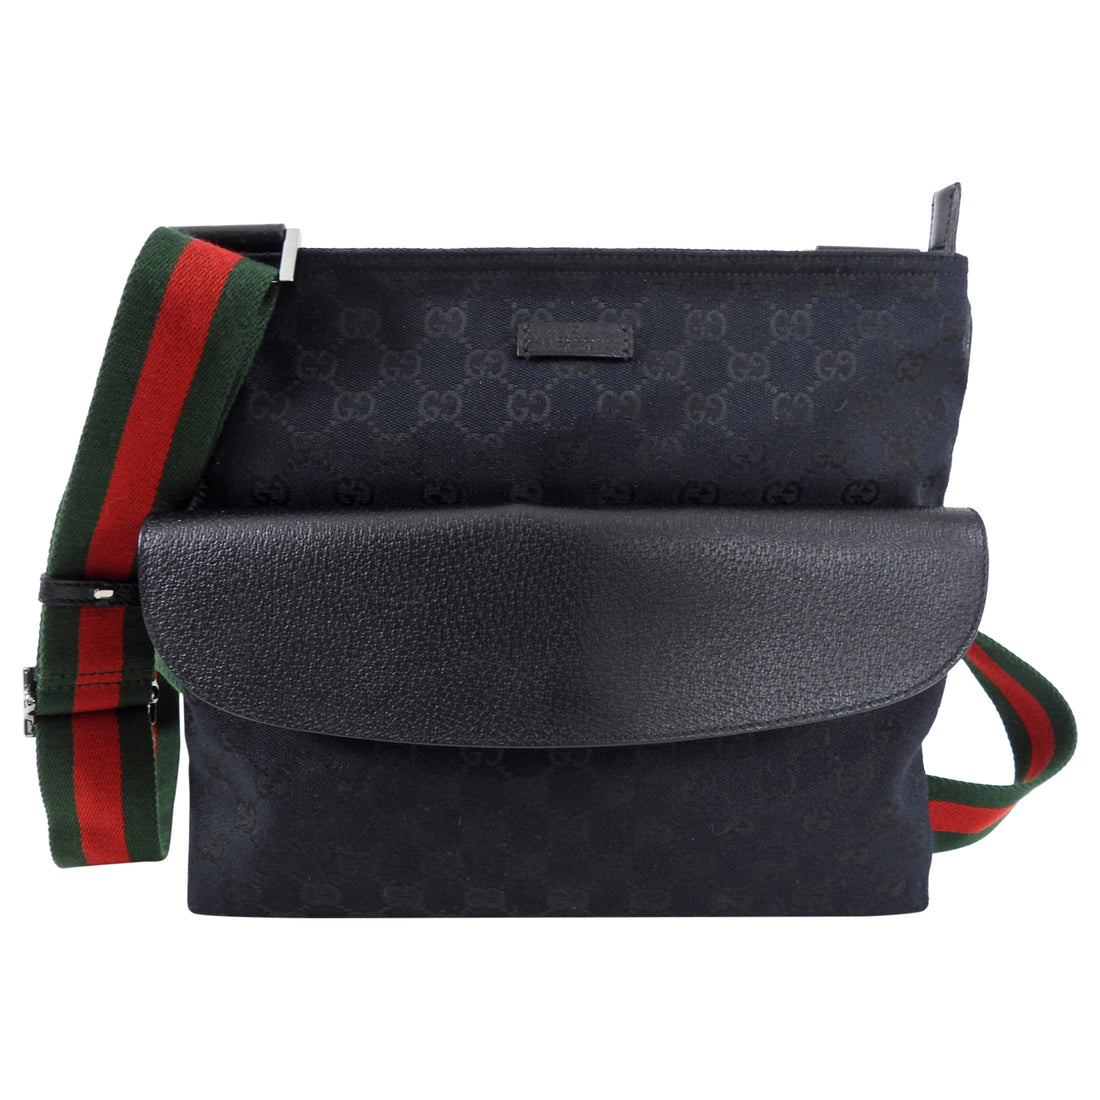 Gucci black canvas chest bag  Bags, Chest bag, Gucci black